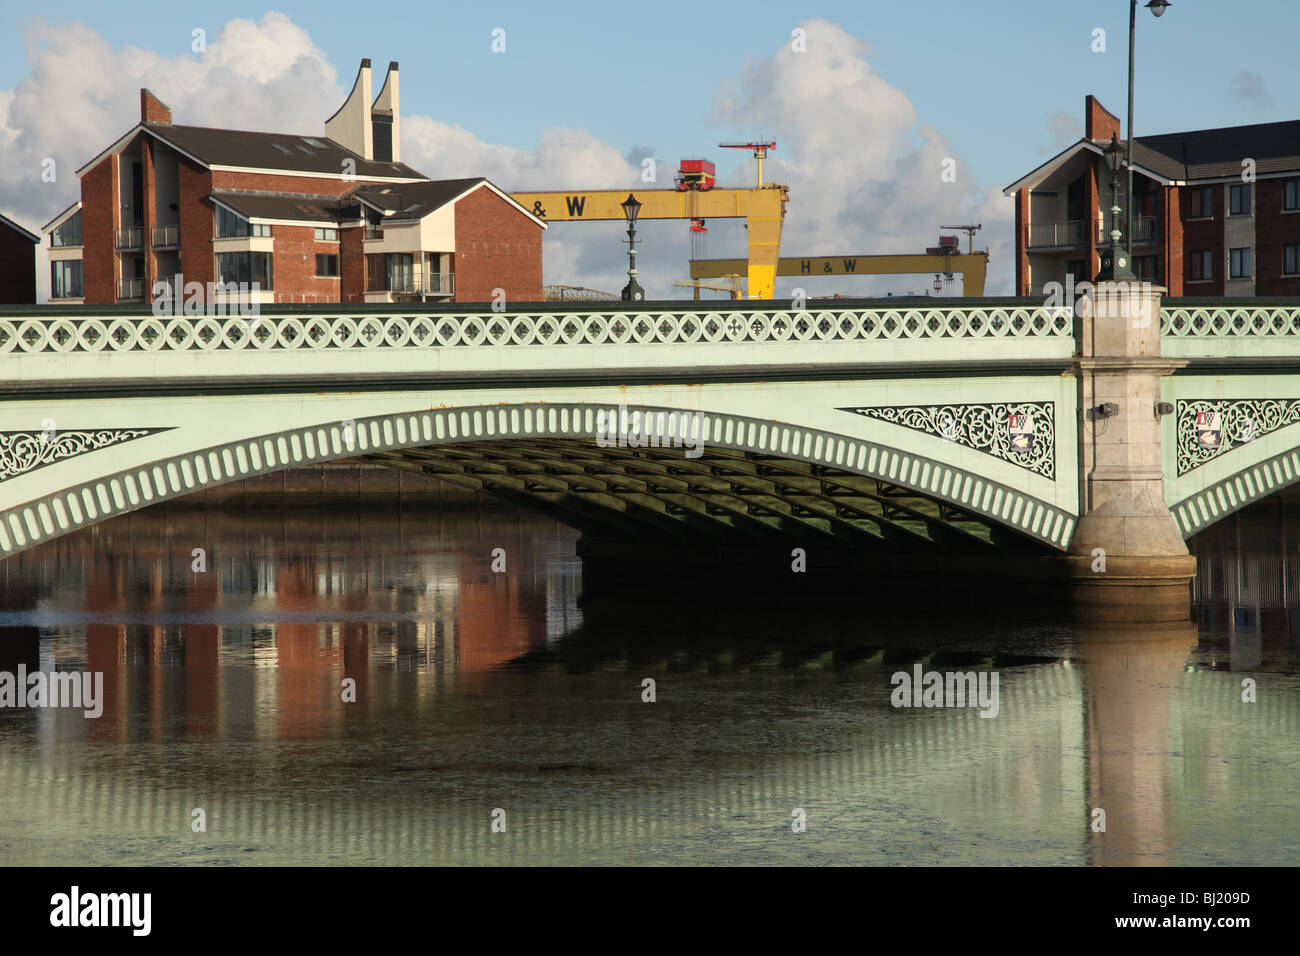 Queens Lanyon Bridge spanning the River lagan. Belfast, Northern Ireland Stock Photo